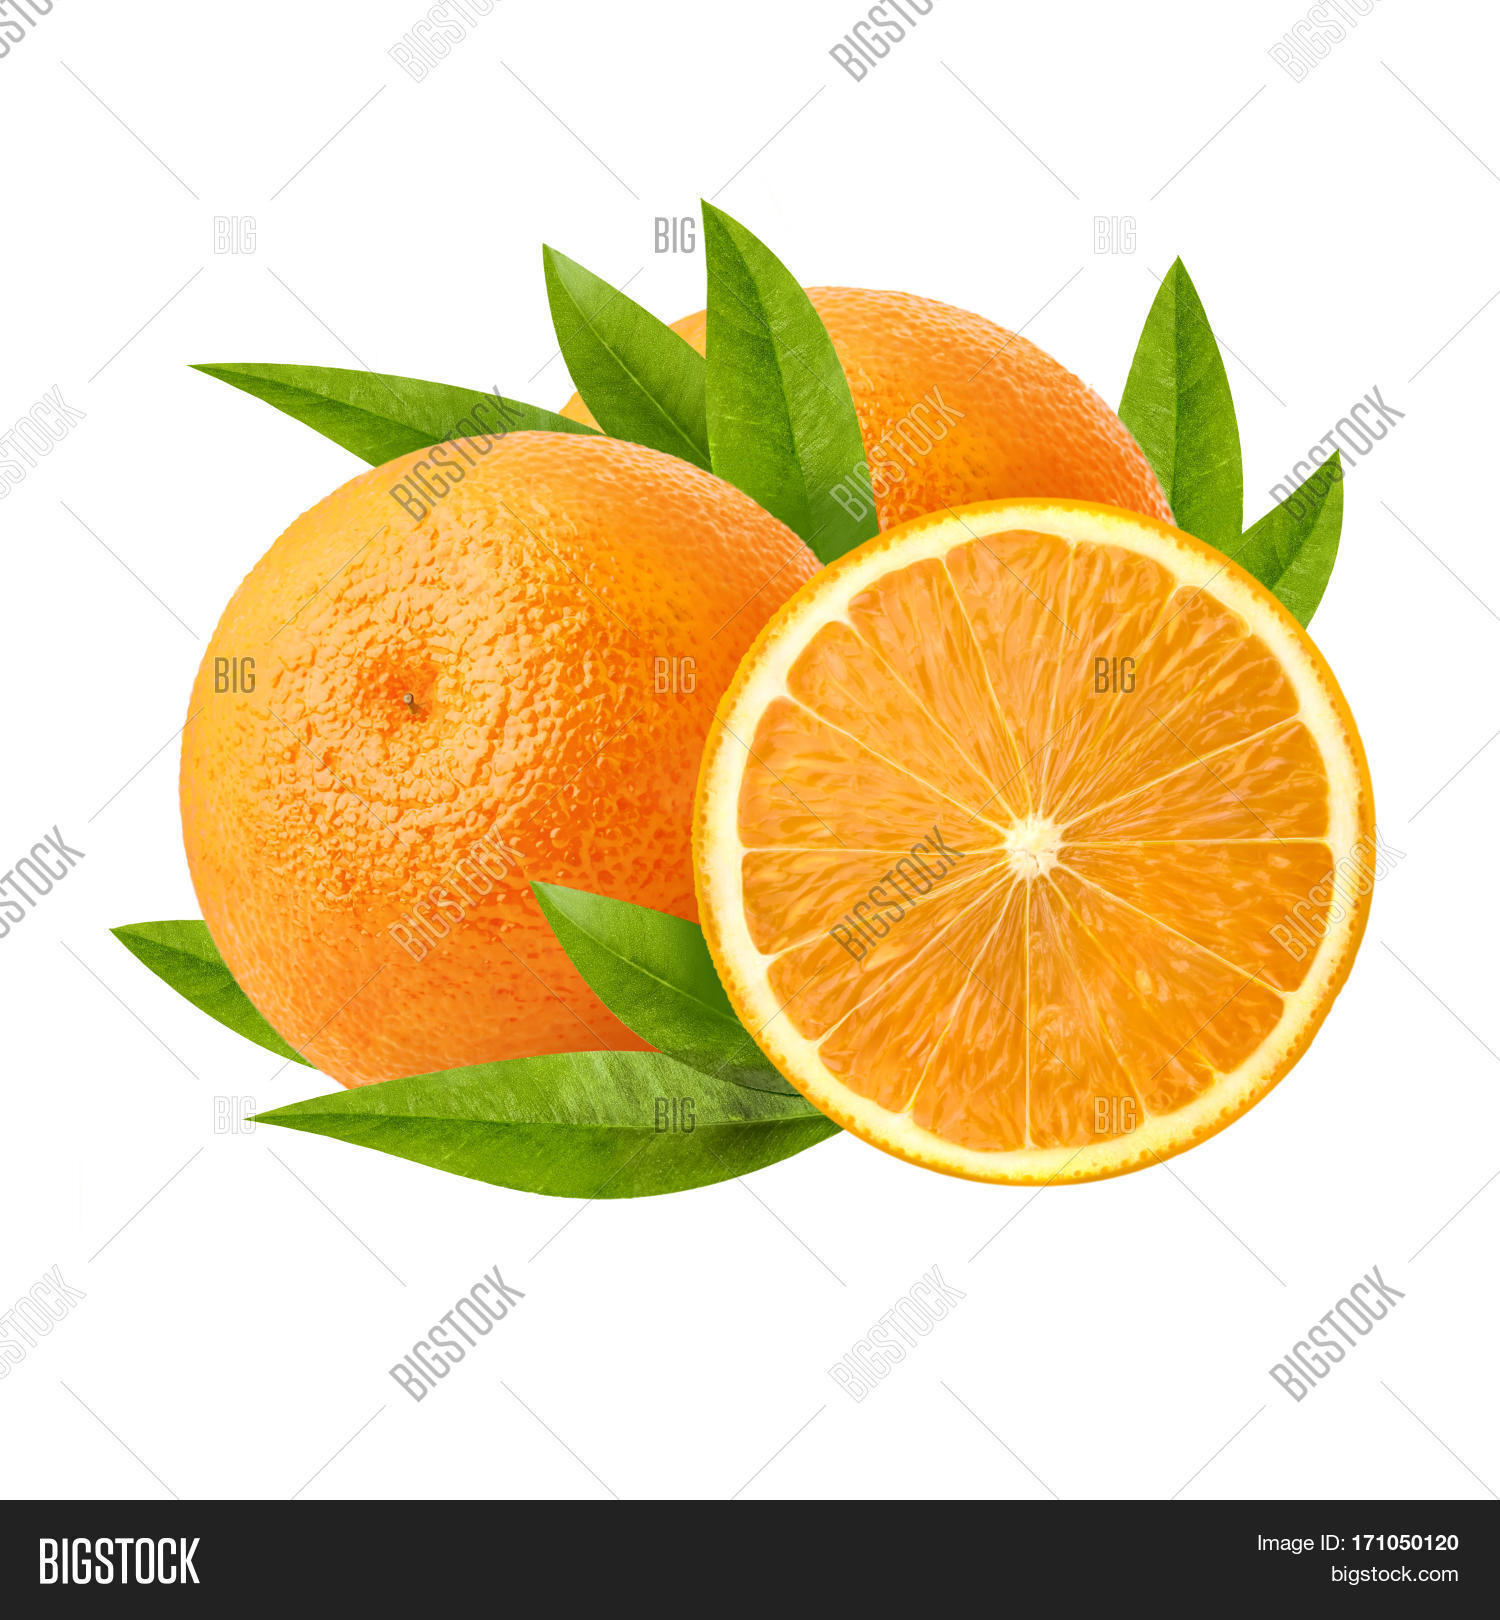 Two Ripe Juicy Orange Half. Image & Photo | Bigstock